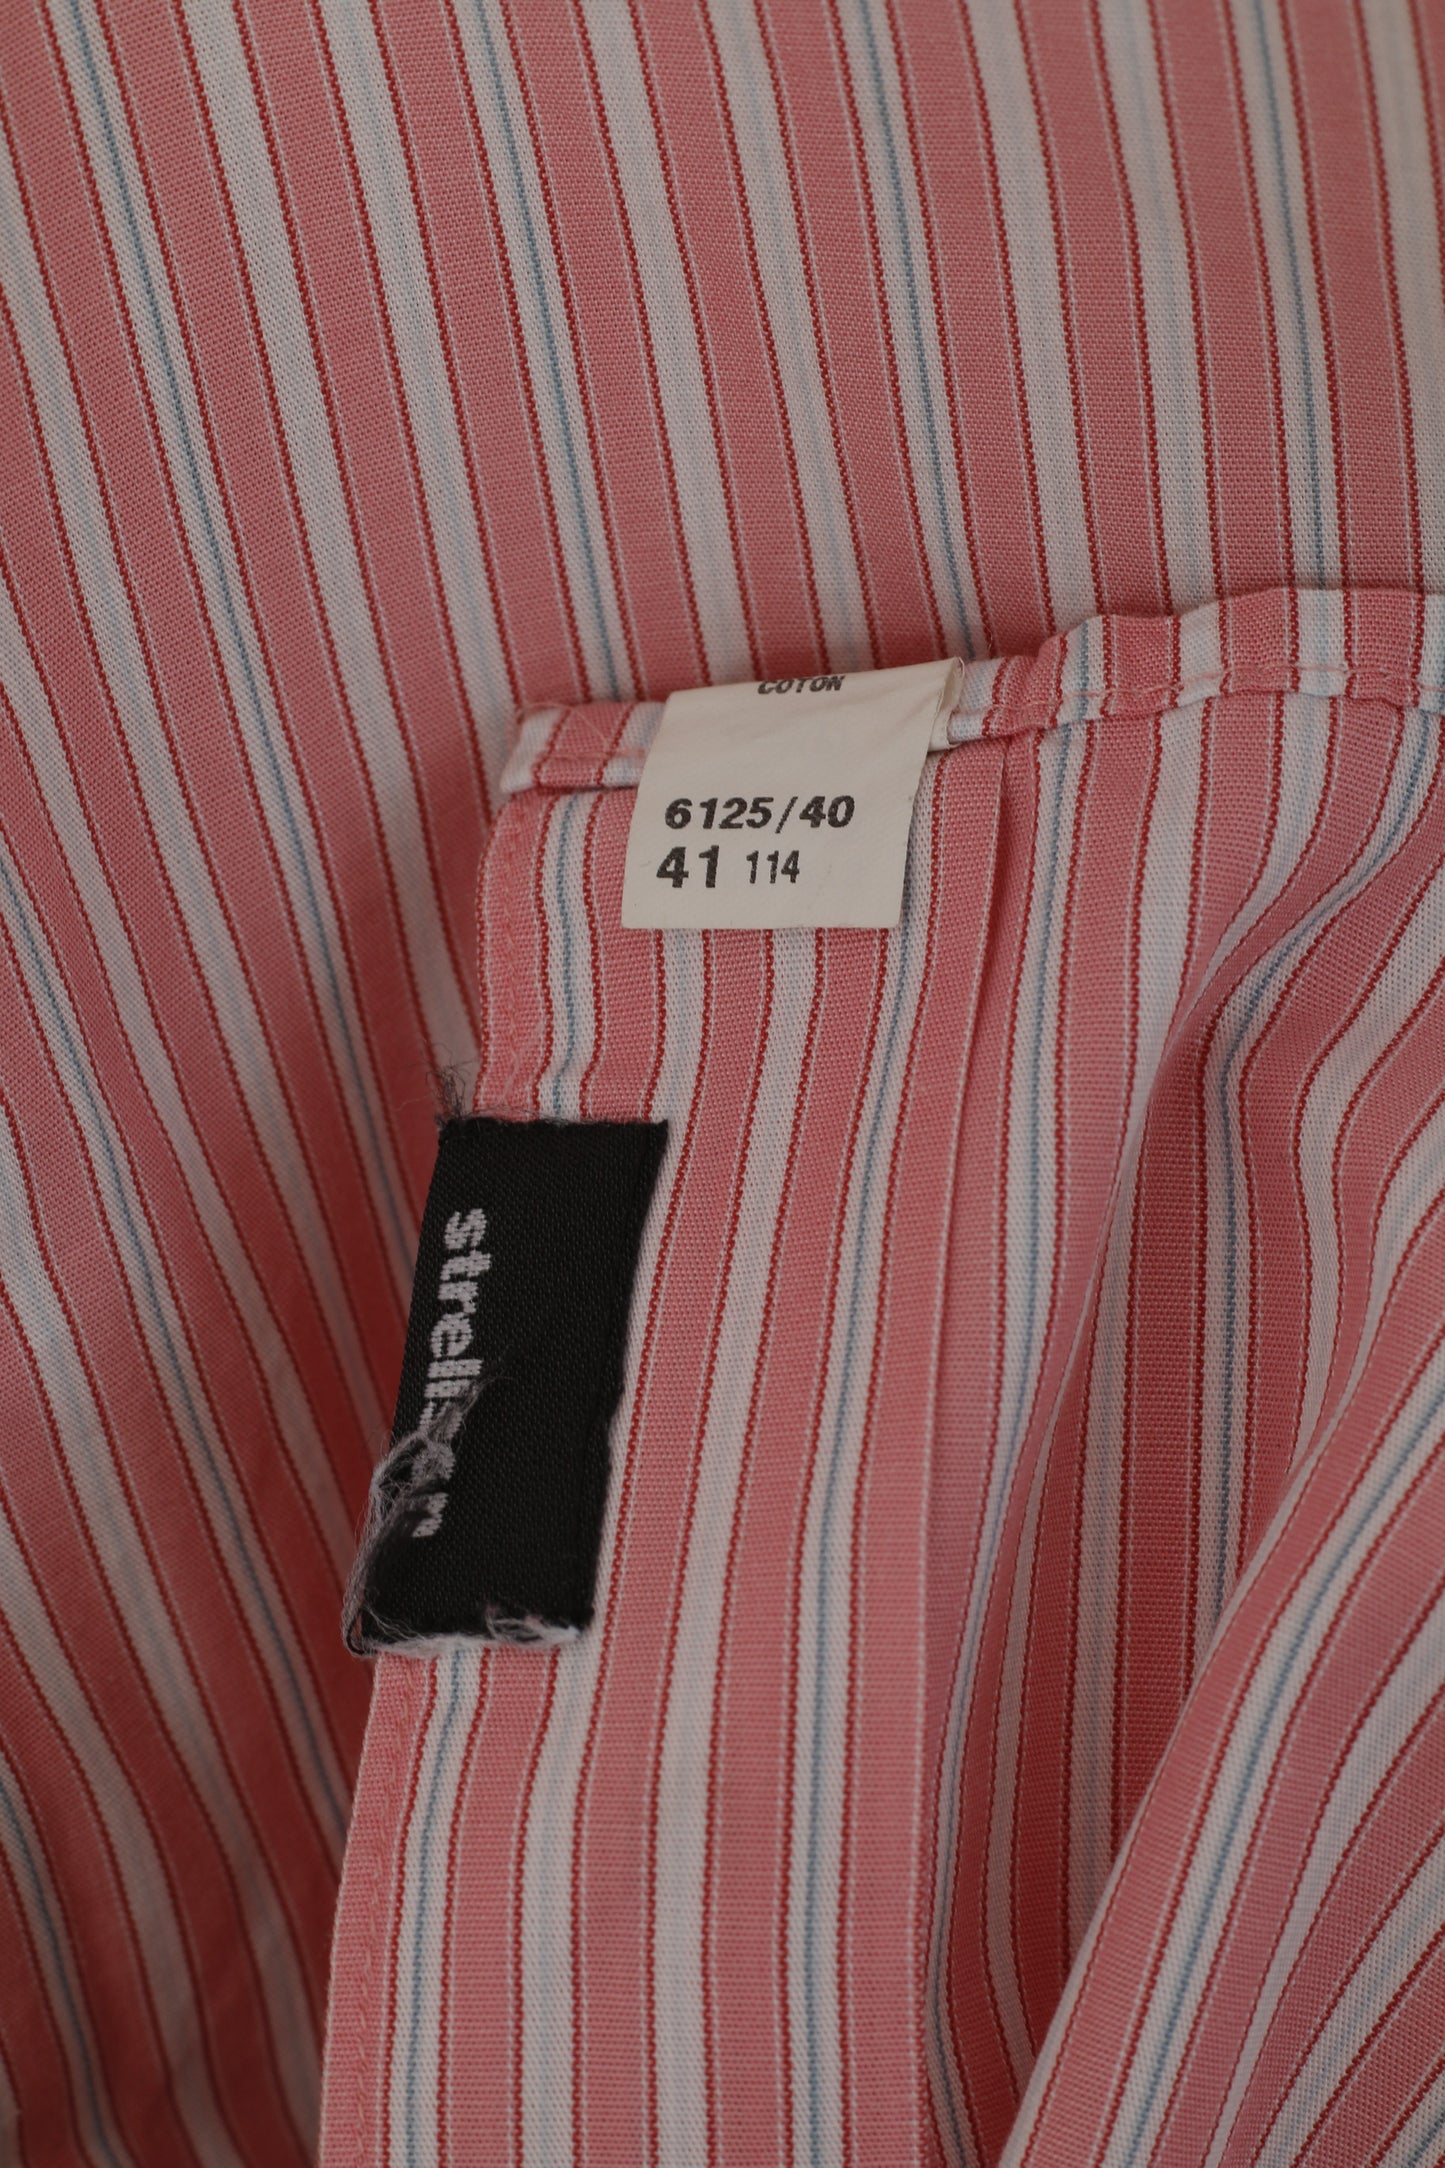 Strellson Men 41 16 M Casual Shirt Pink Striped Cotton Slim Fit Long Sleeve Top